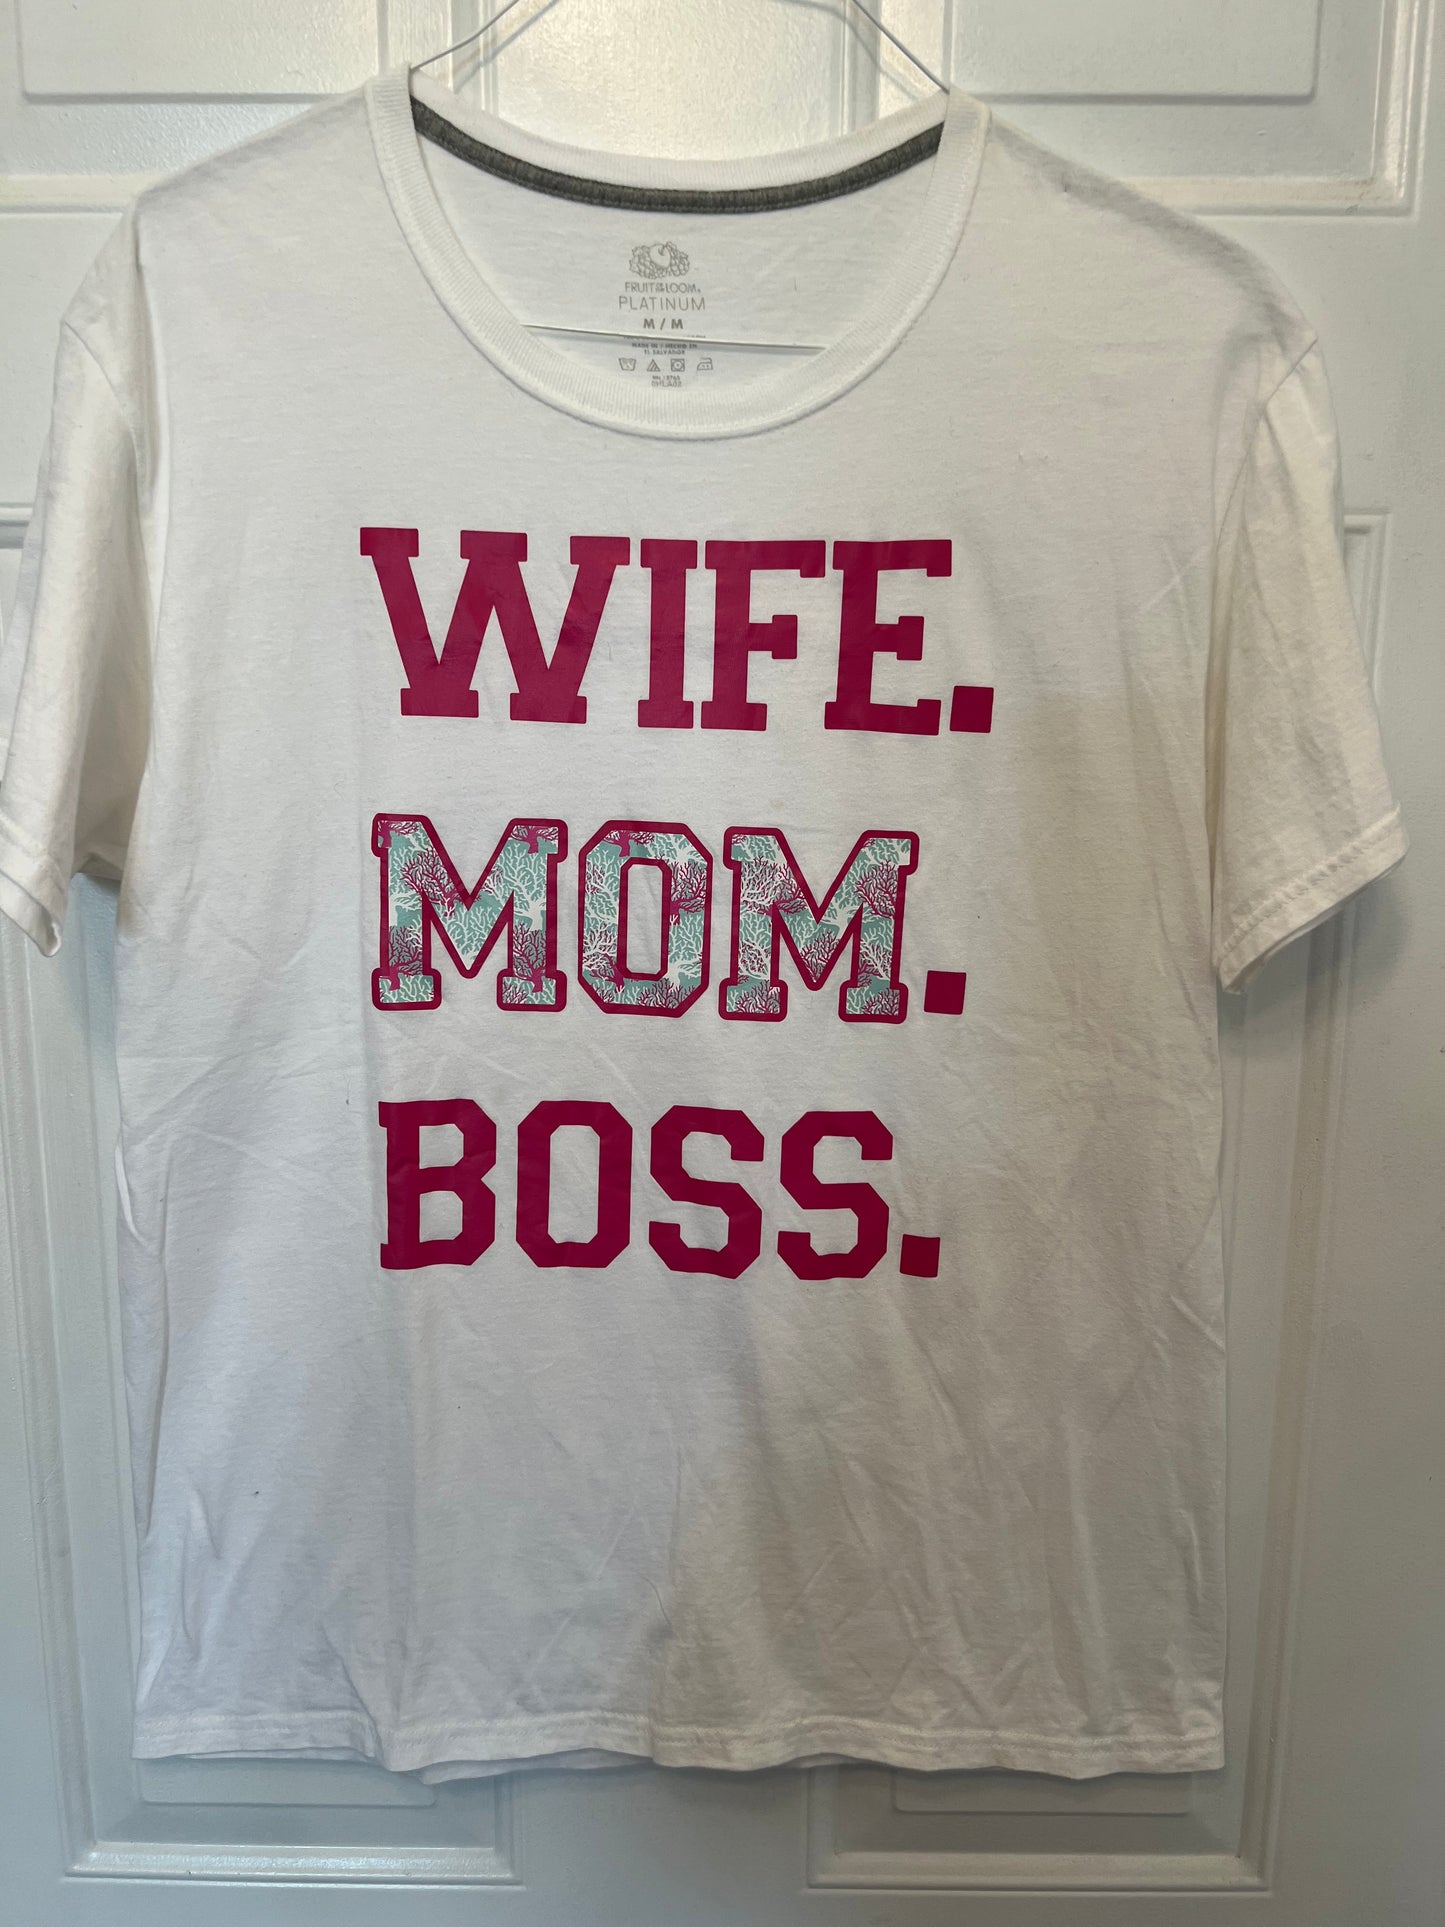 Wife. Mom. Boss. shirt size Medium